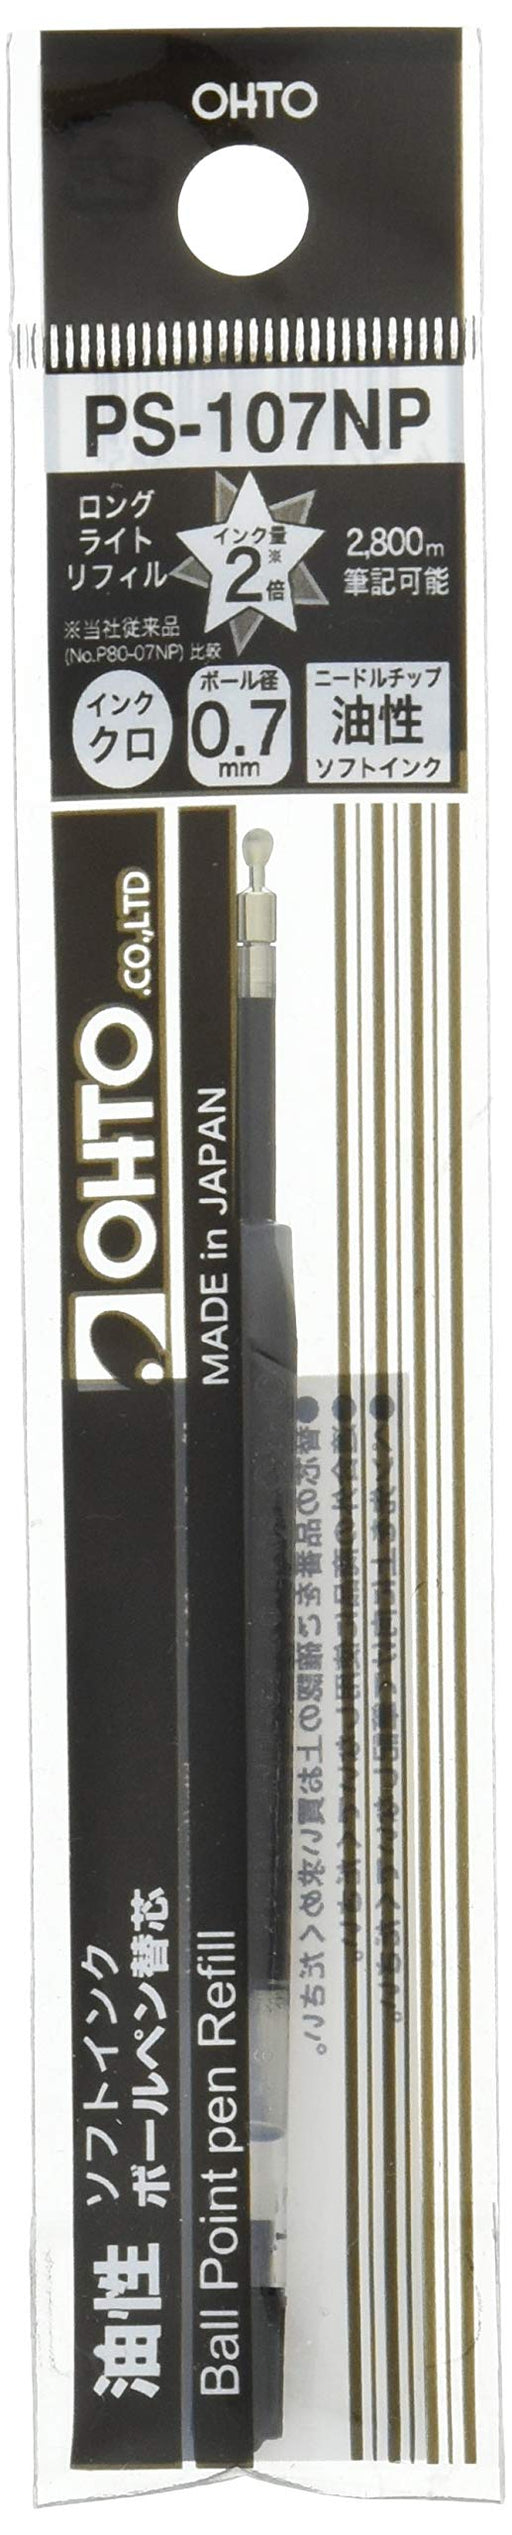 OHTO BallpointPen Refill Oil Based 0.7mm 5P Box PS-107NPBlack/5P Made in Japan_1